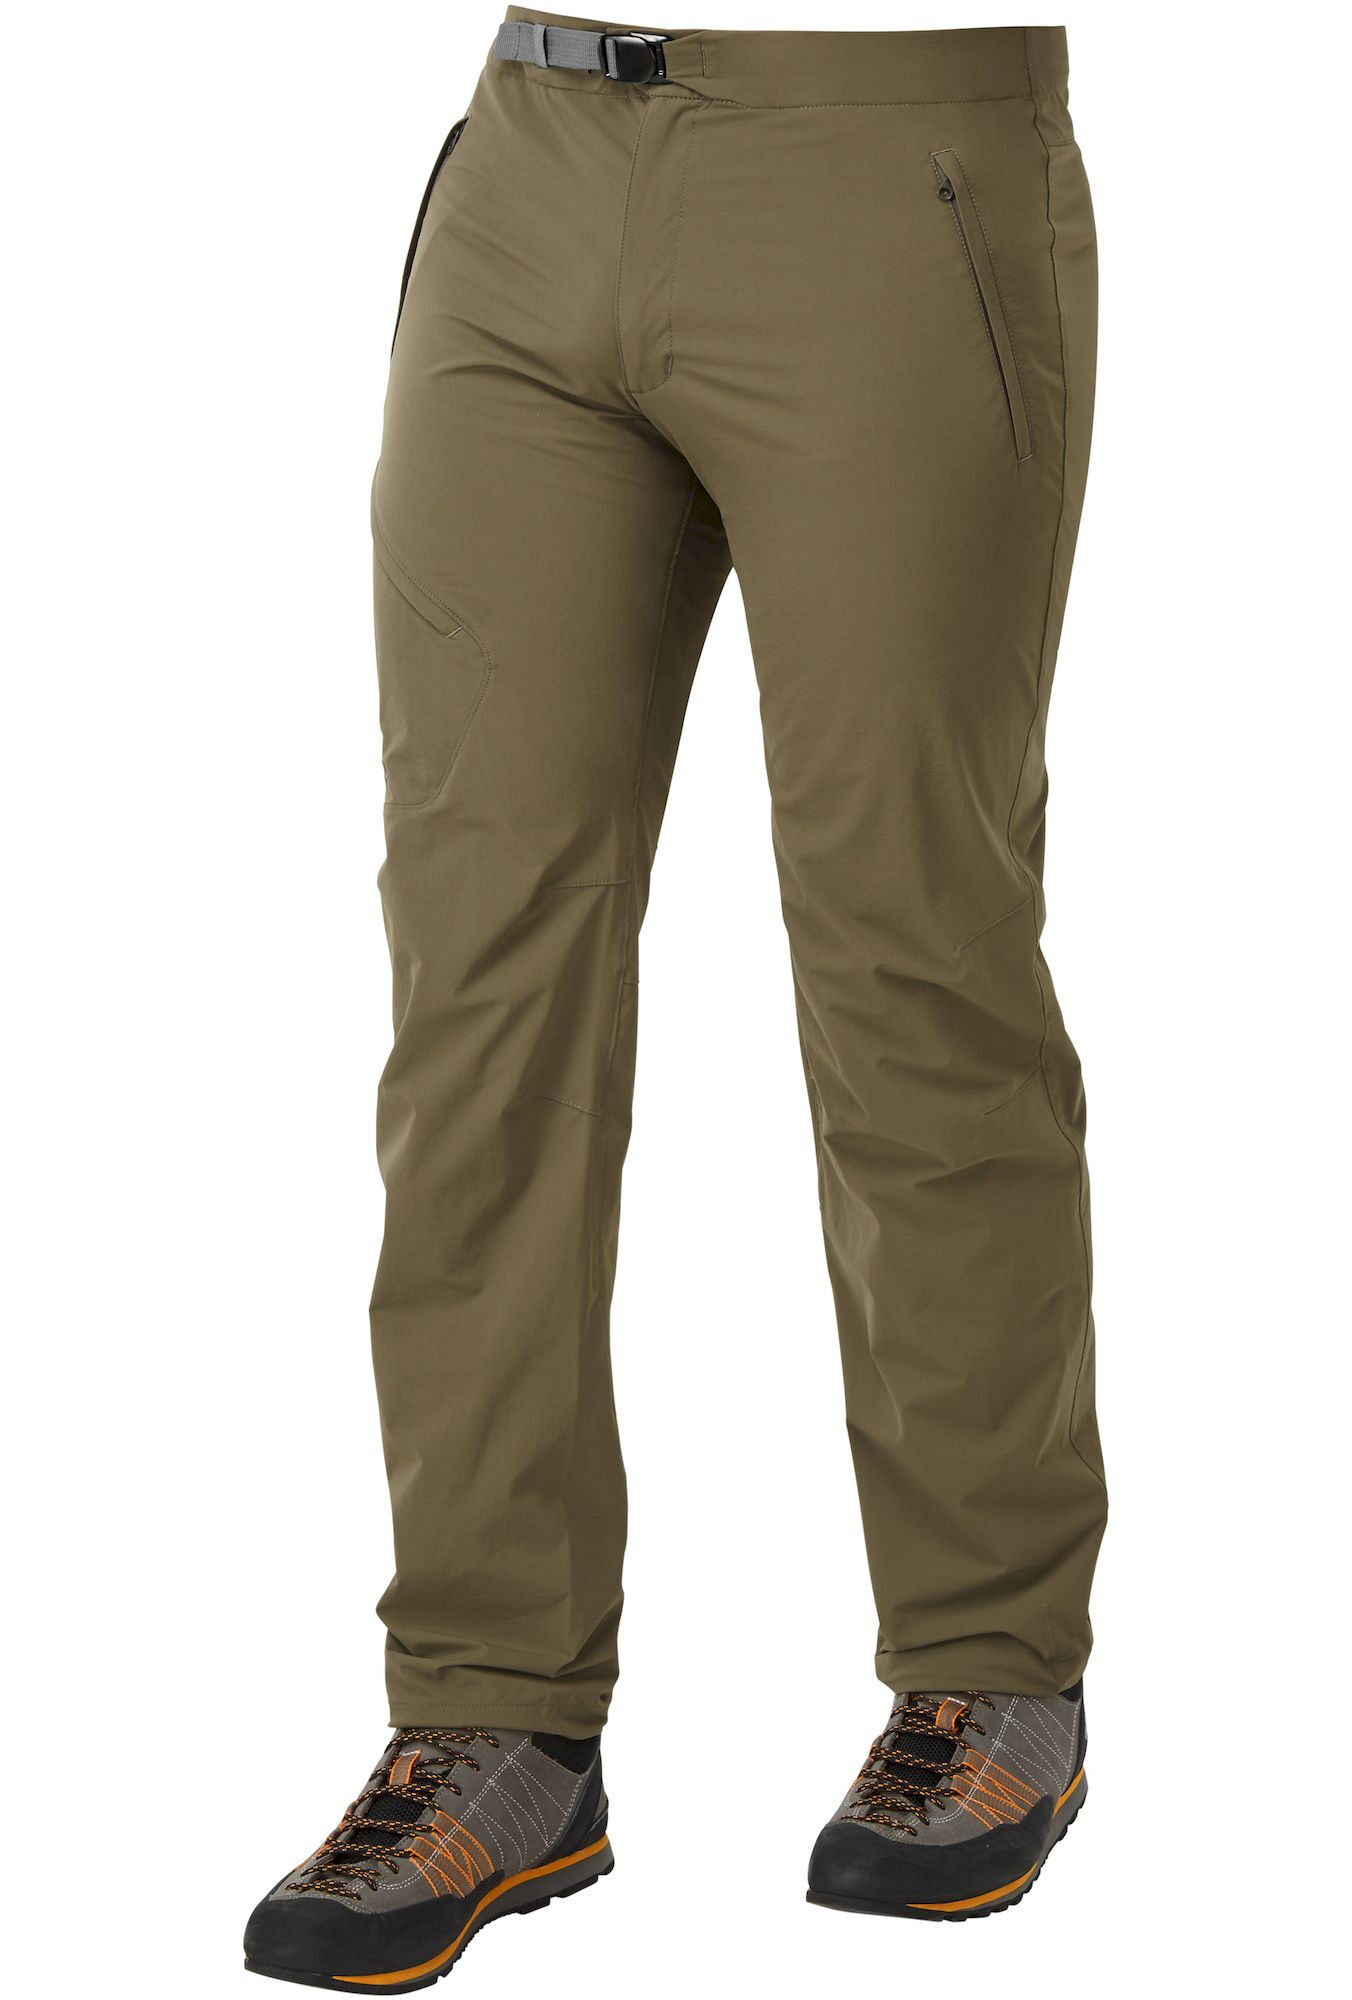 Mountain Equipment Comici Pant - Mountaineering trousers - Men's | Hardloop